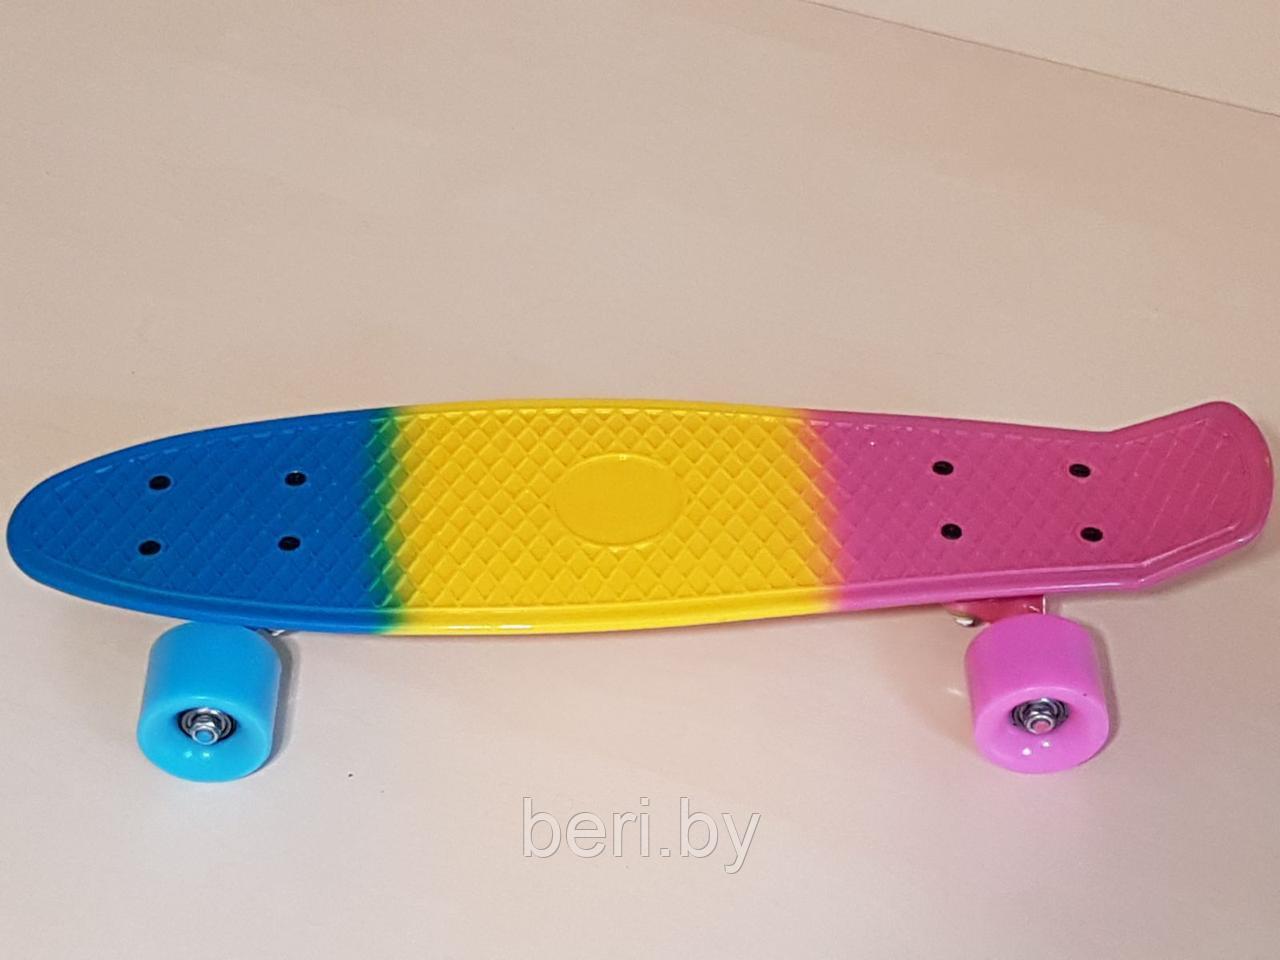 Скейтборд, пенниборд, пенниборд для начинающих трехцветный Penny Board  56,5 см, арт 350-3, фото 1